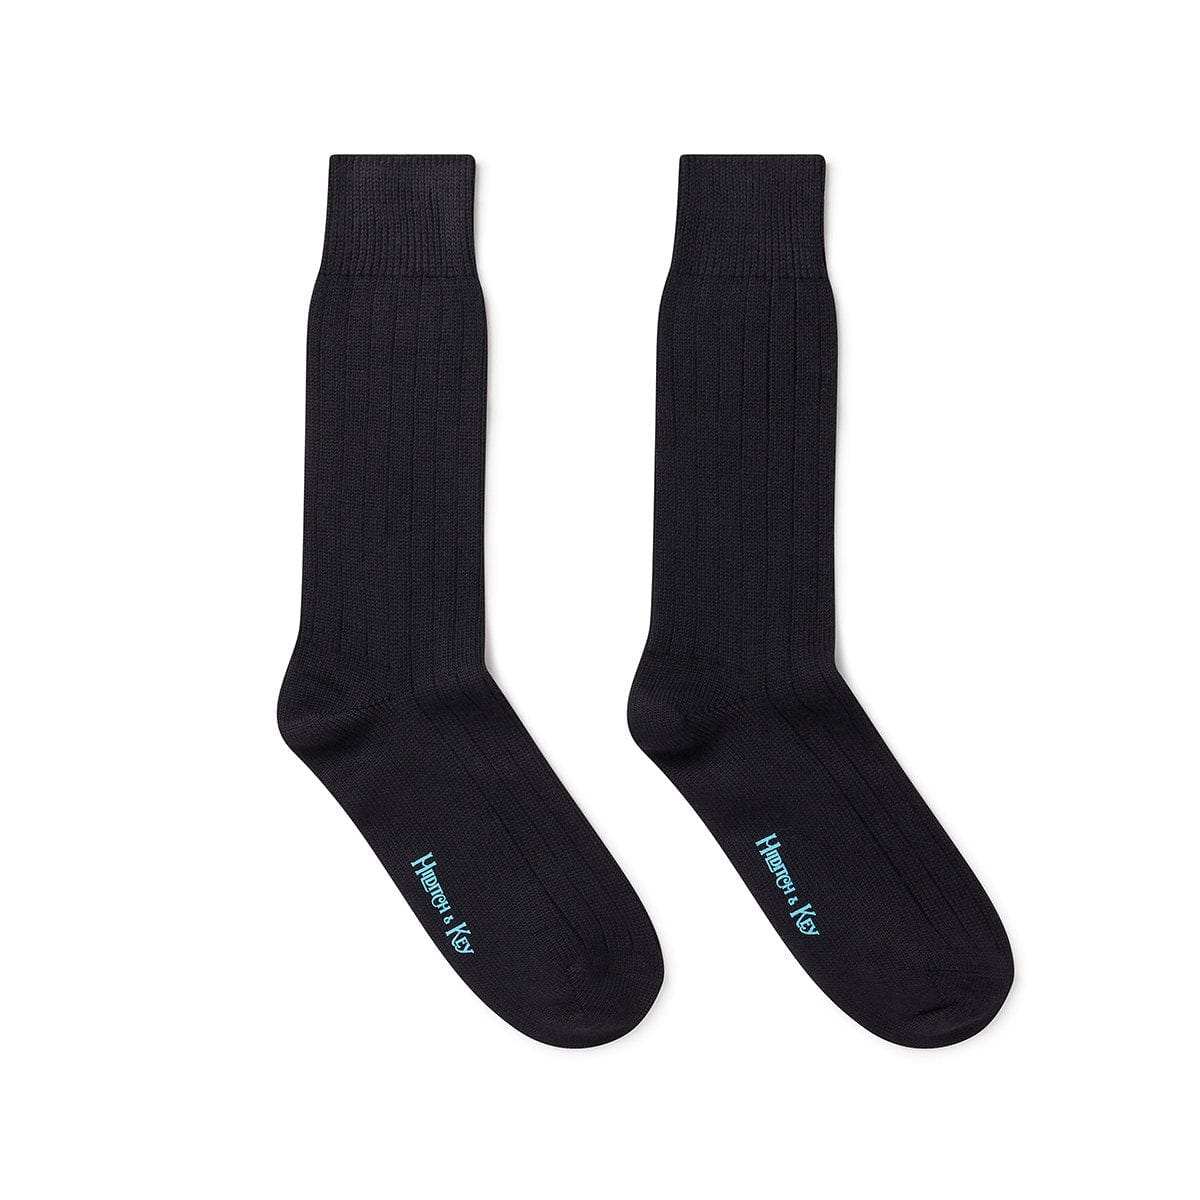 Short Black Heavy Sports Wool Socks